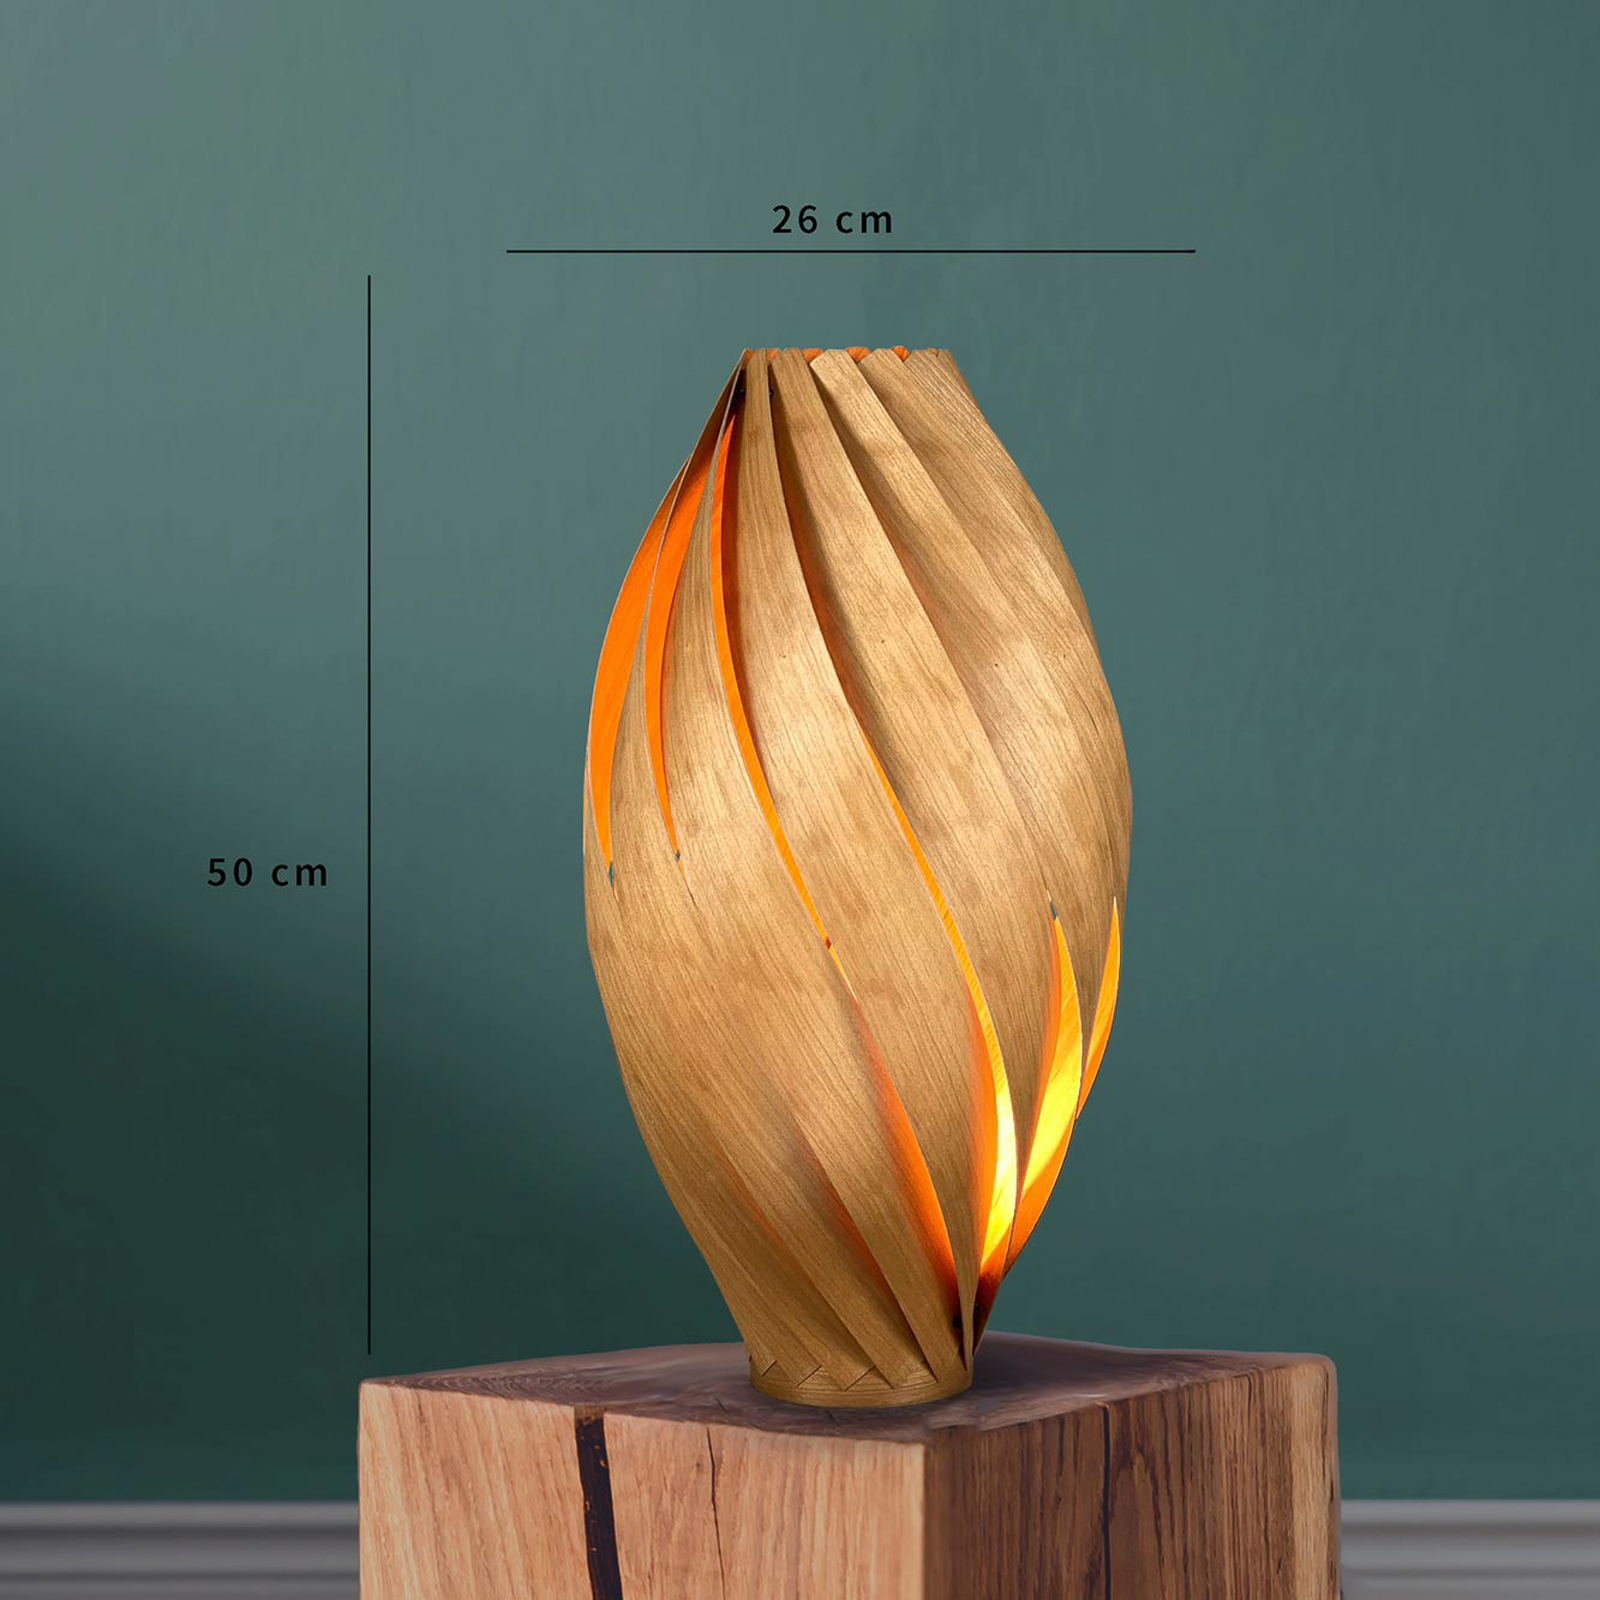 Gofurnit Ardere -pöytälamppu, kirsikkapuu, K 50 cm